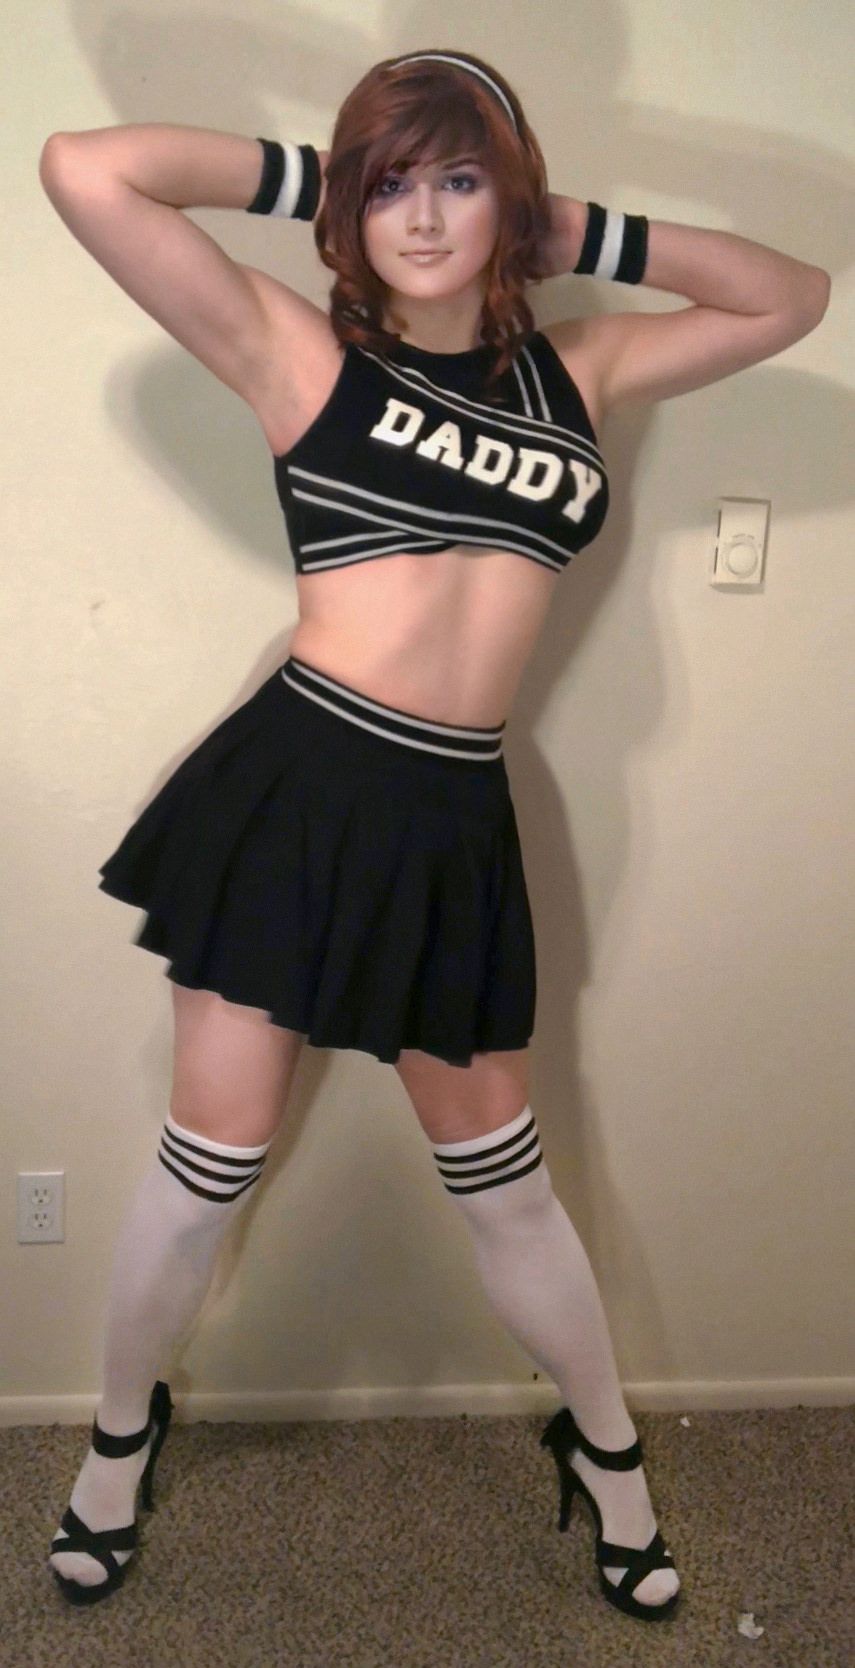 Trap cheerleader